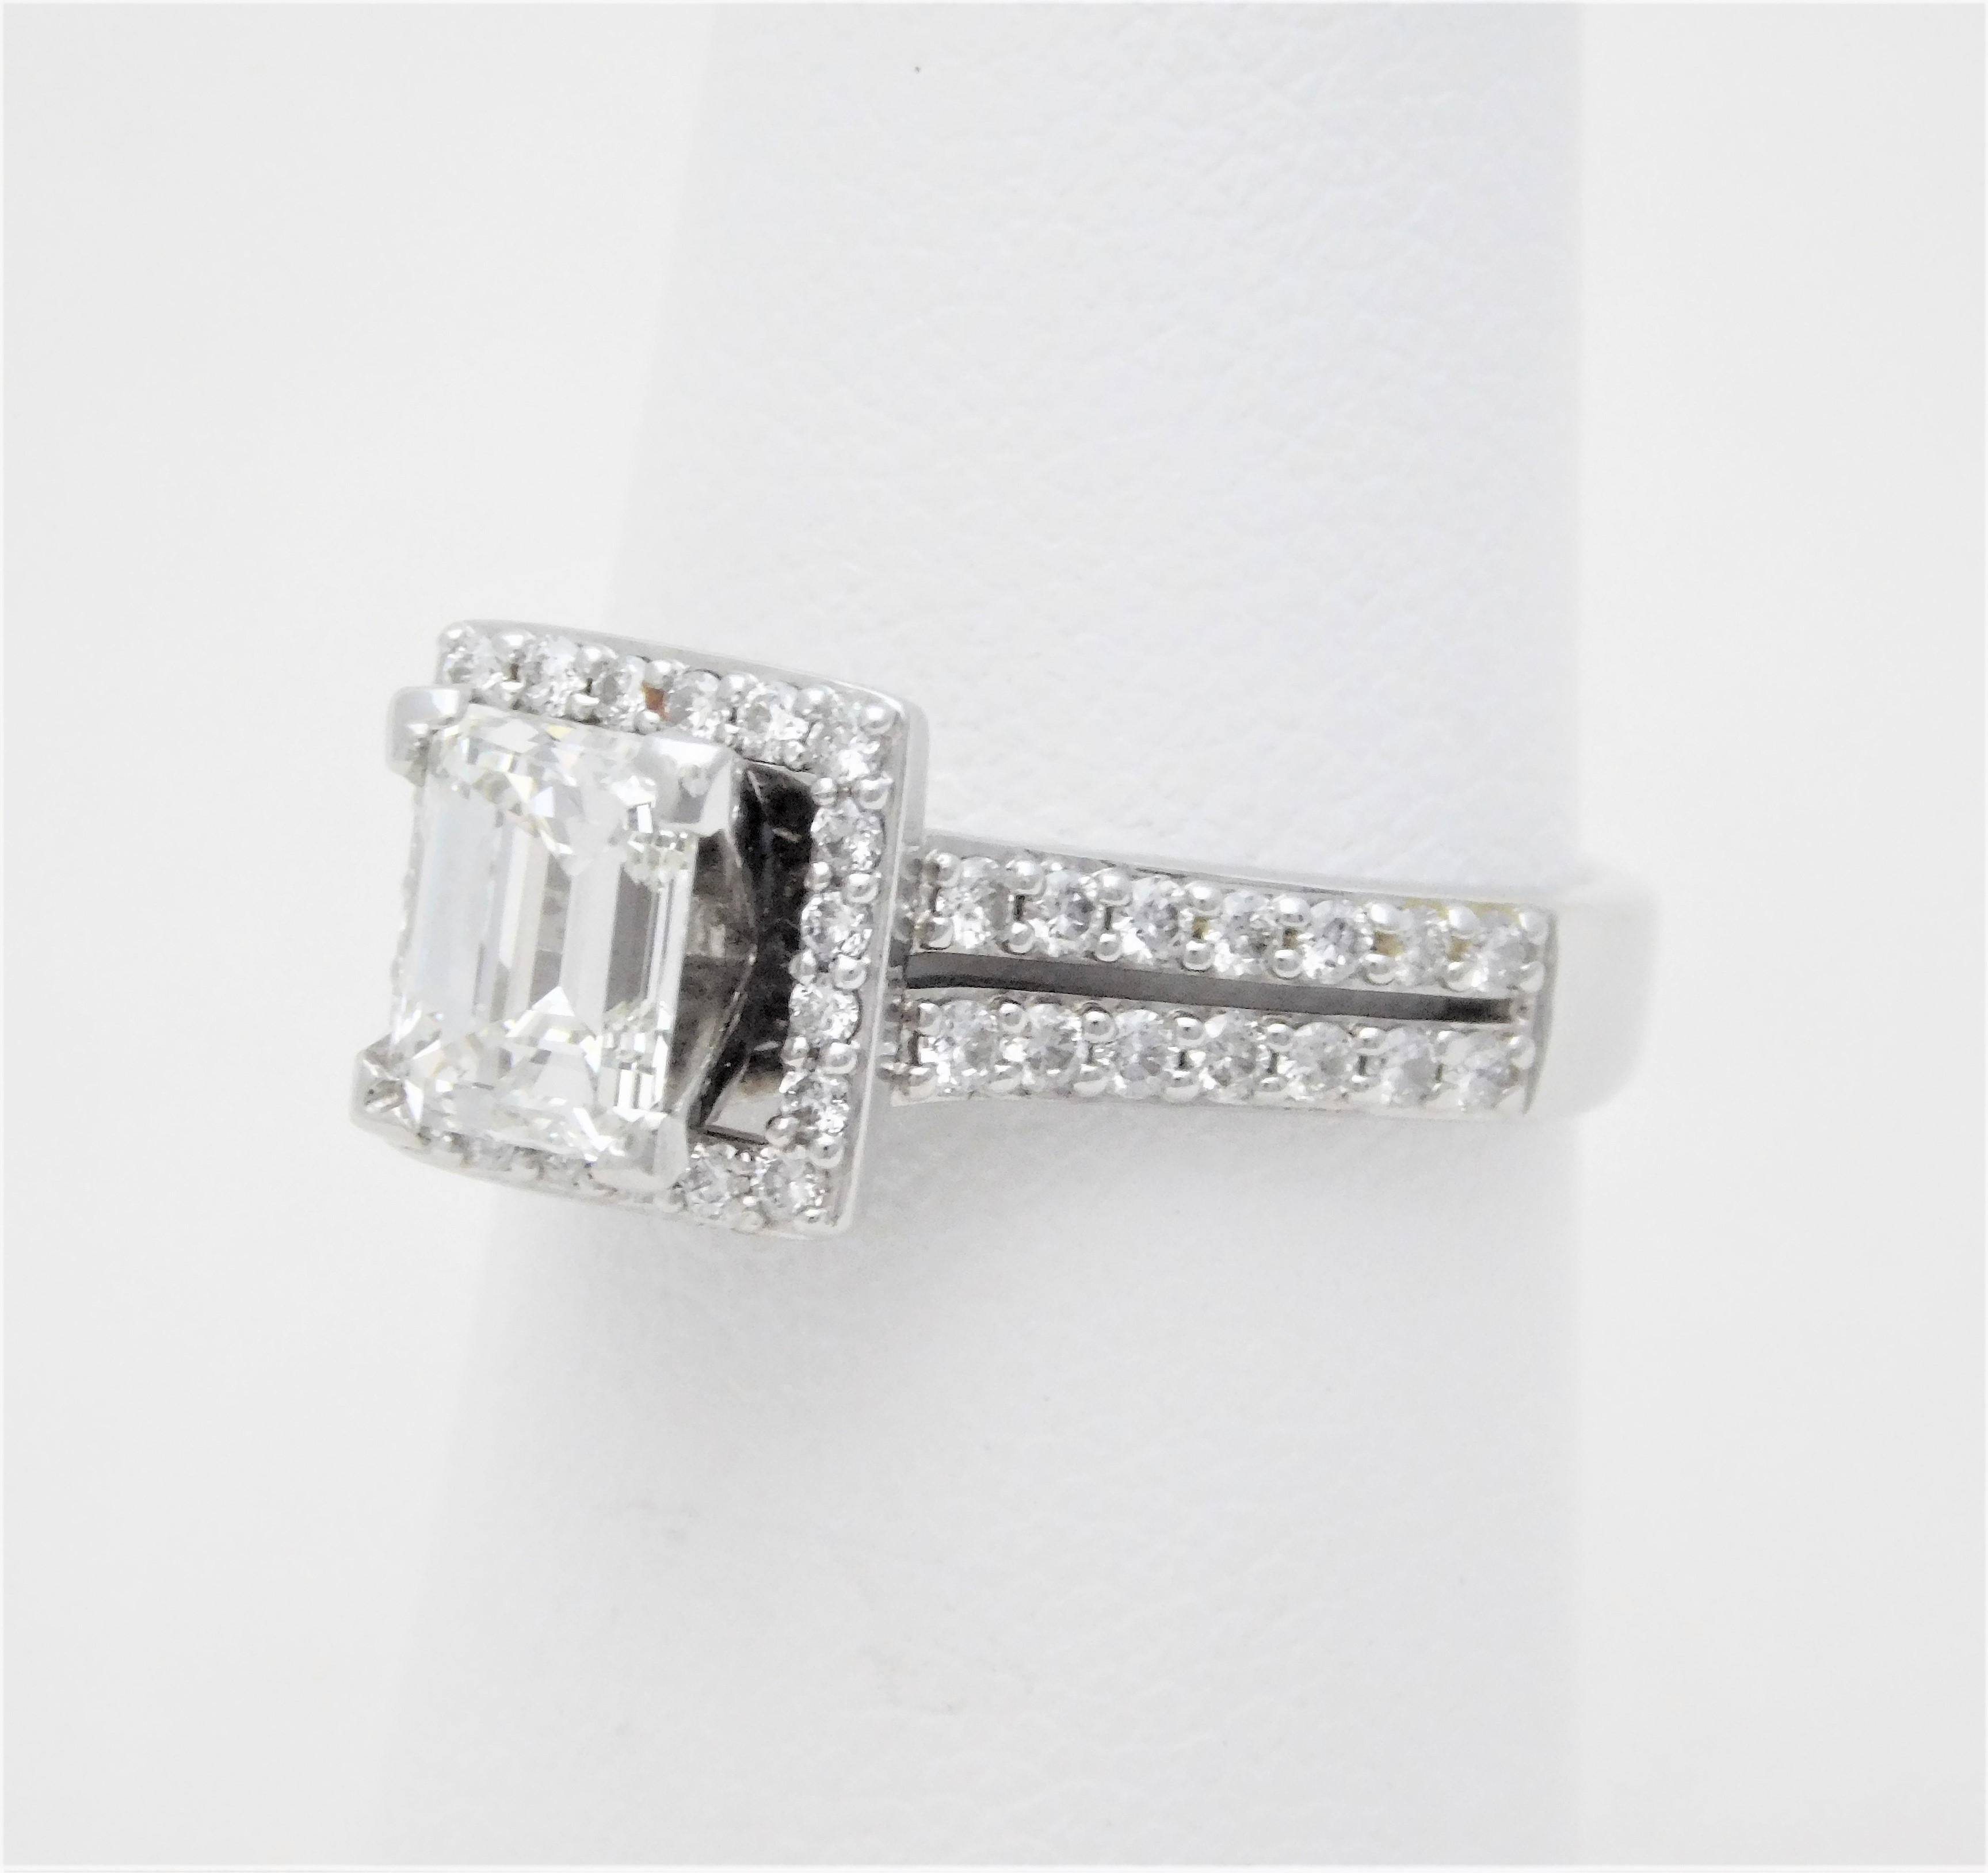 UGS Certified 2.18 Carat Emerald Cut Diamond Engagement Ring 5